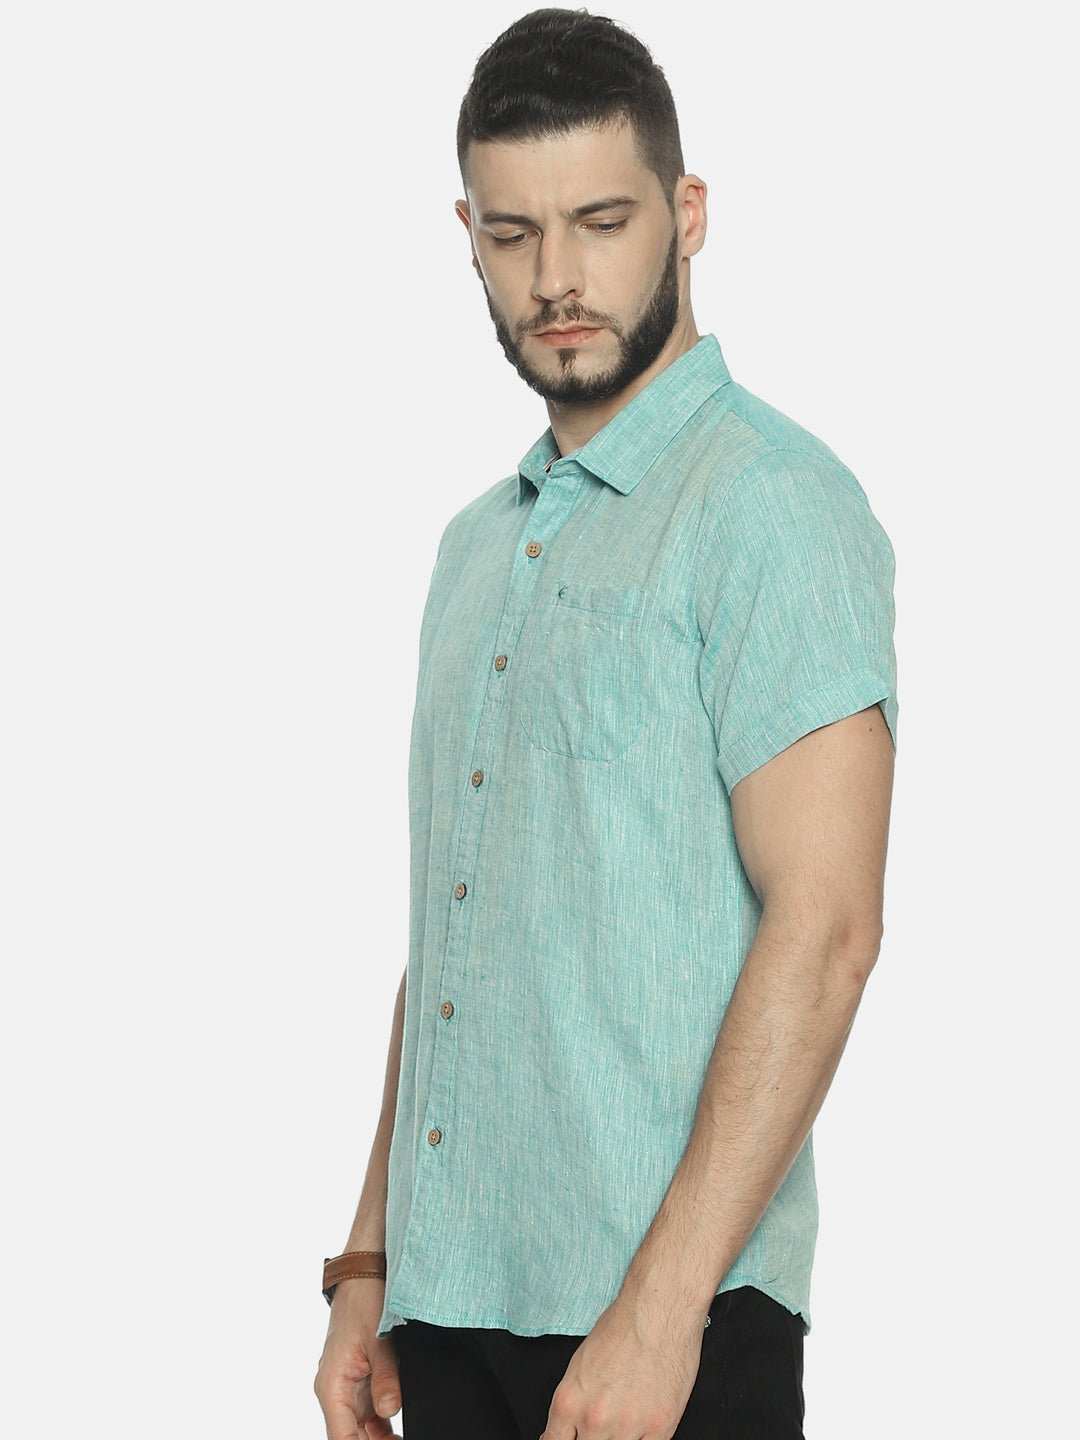 Ecentric Teal Green Colour Slim Fit Hemp Casual Shirt - CBD Store India